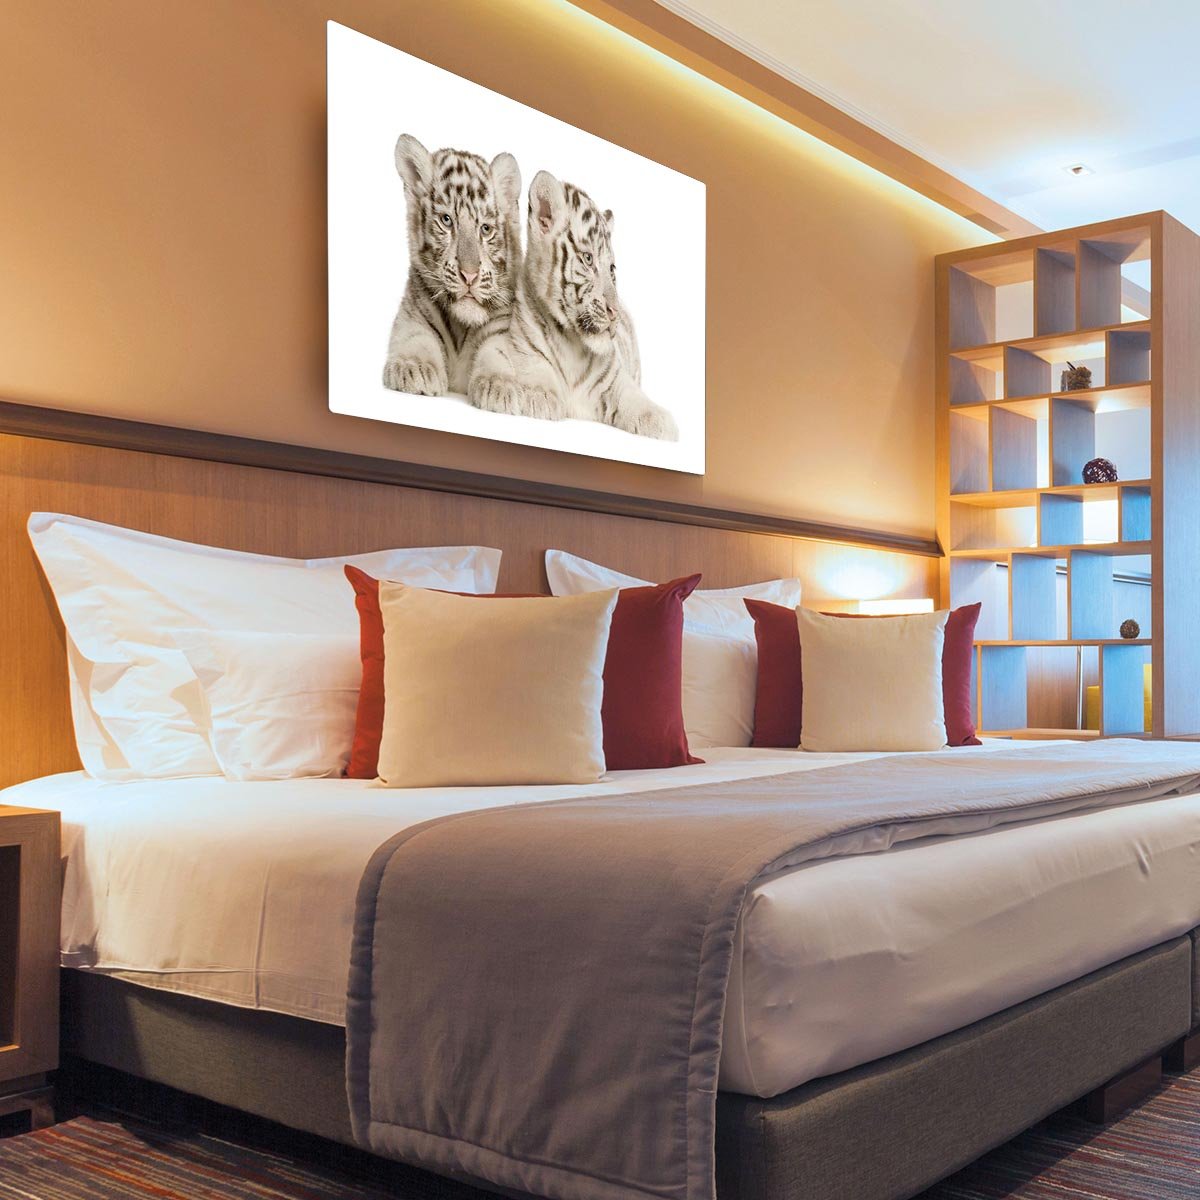 White Tiger cubs HD Metal Print - Canvas Art Rocks - 3